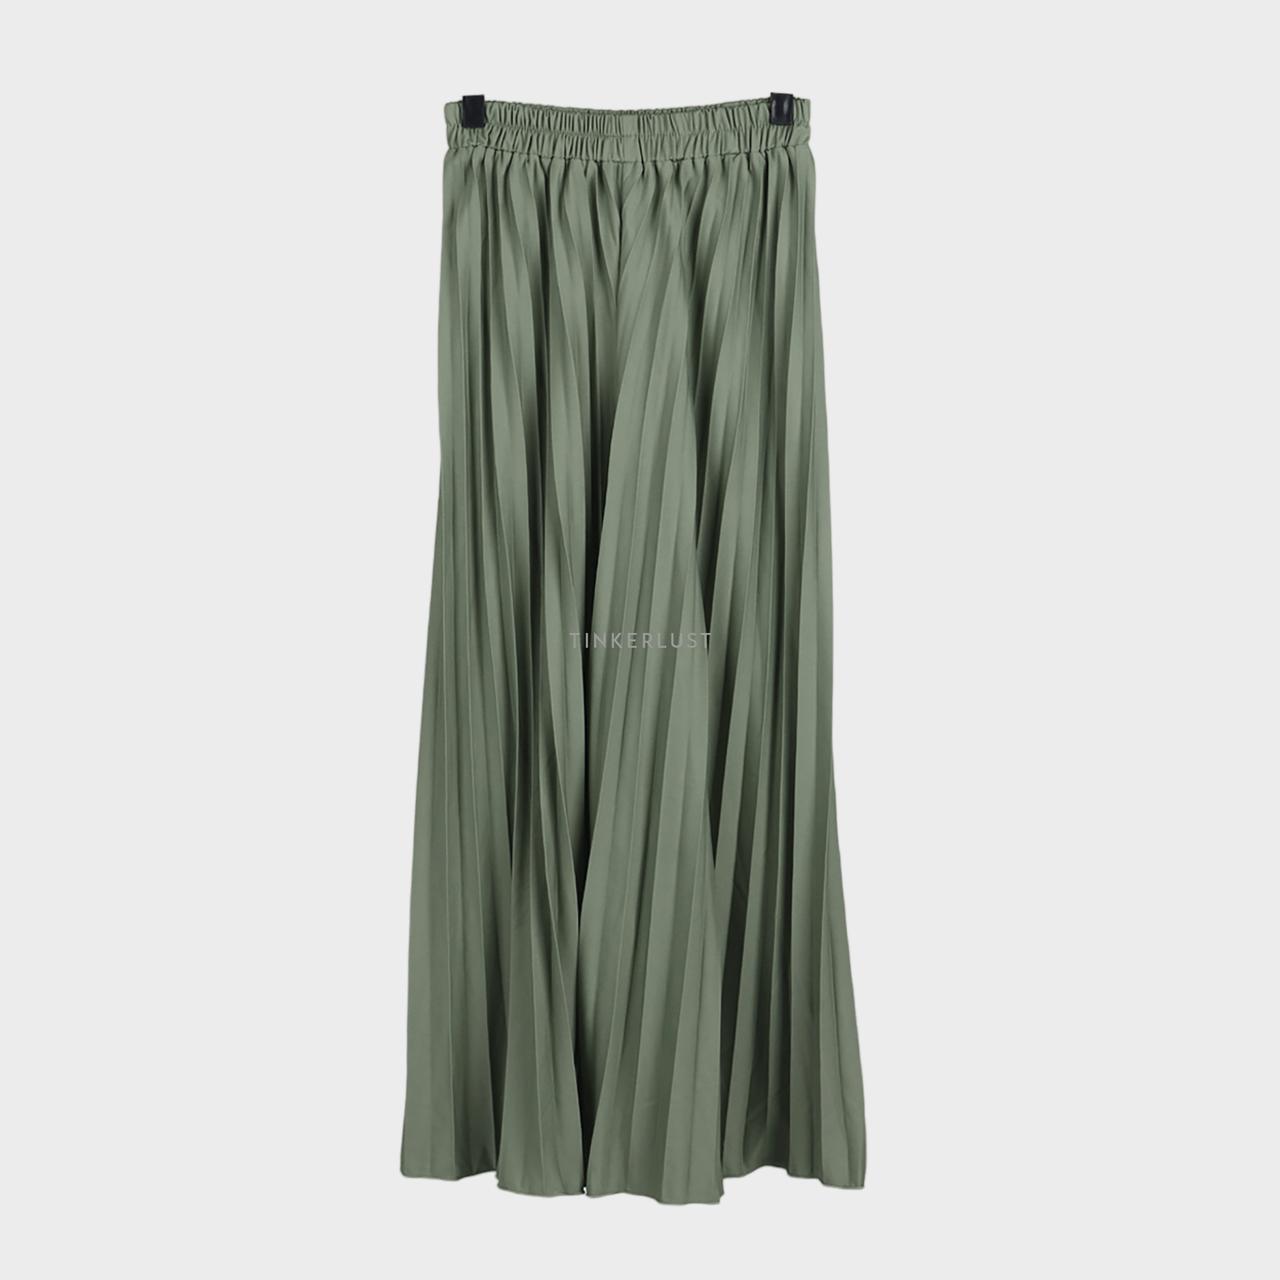 Private Collection Sage Green Plisket Long Pants